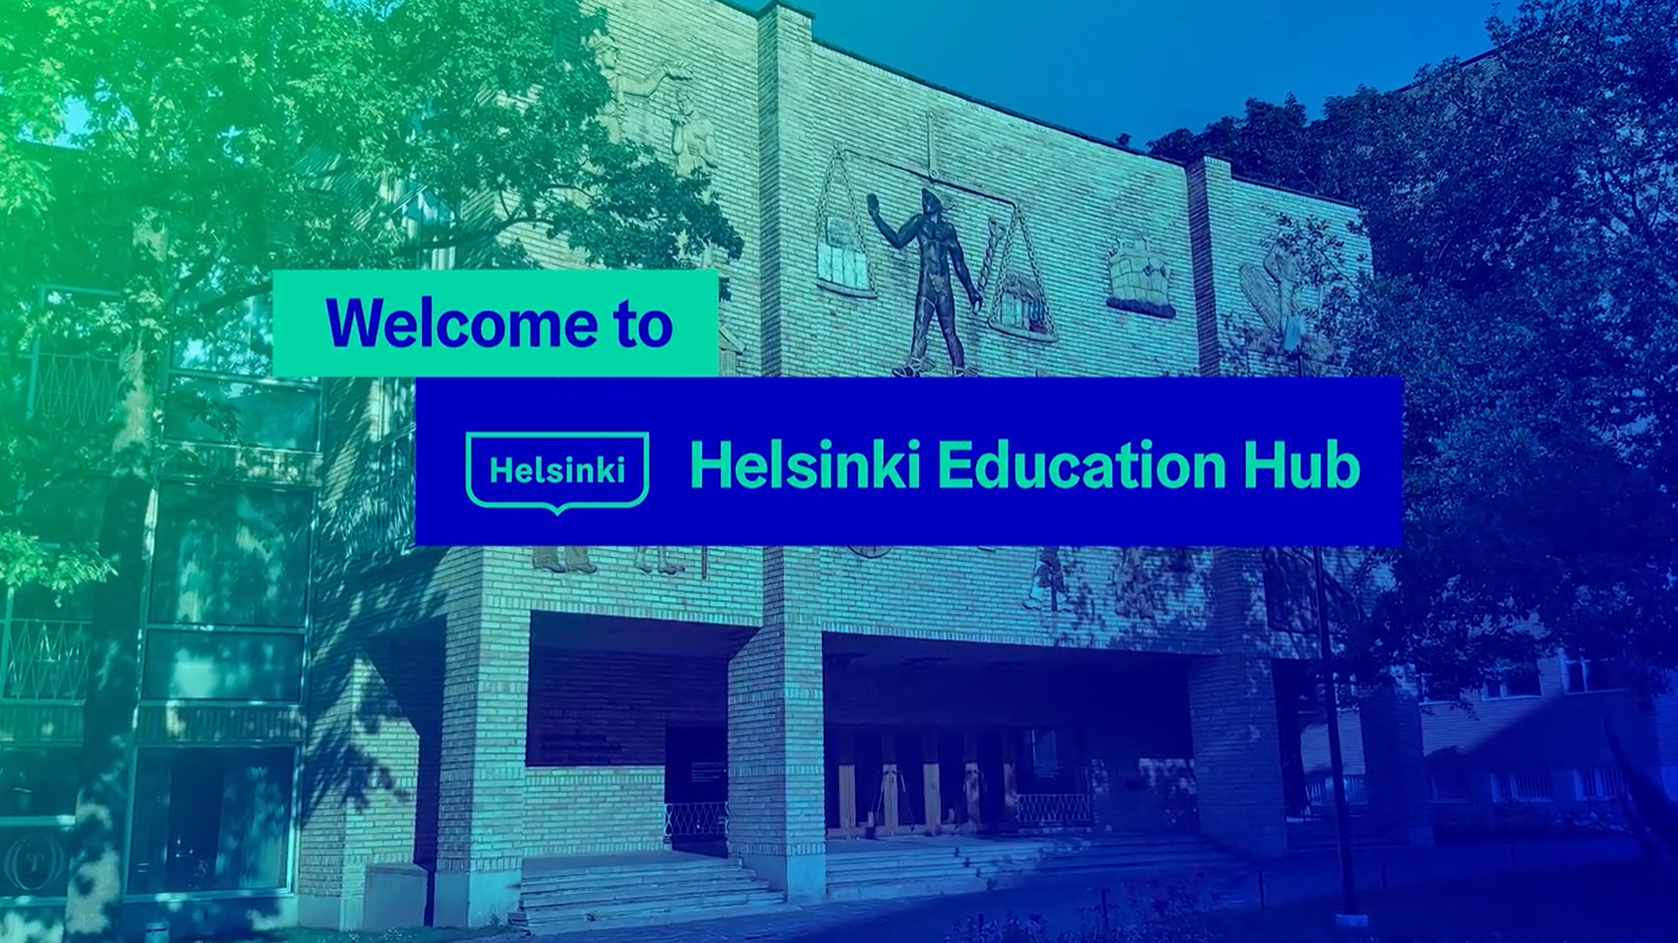 Helsinki Education Hub Introduction